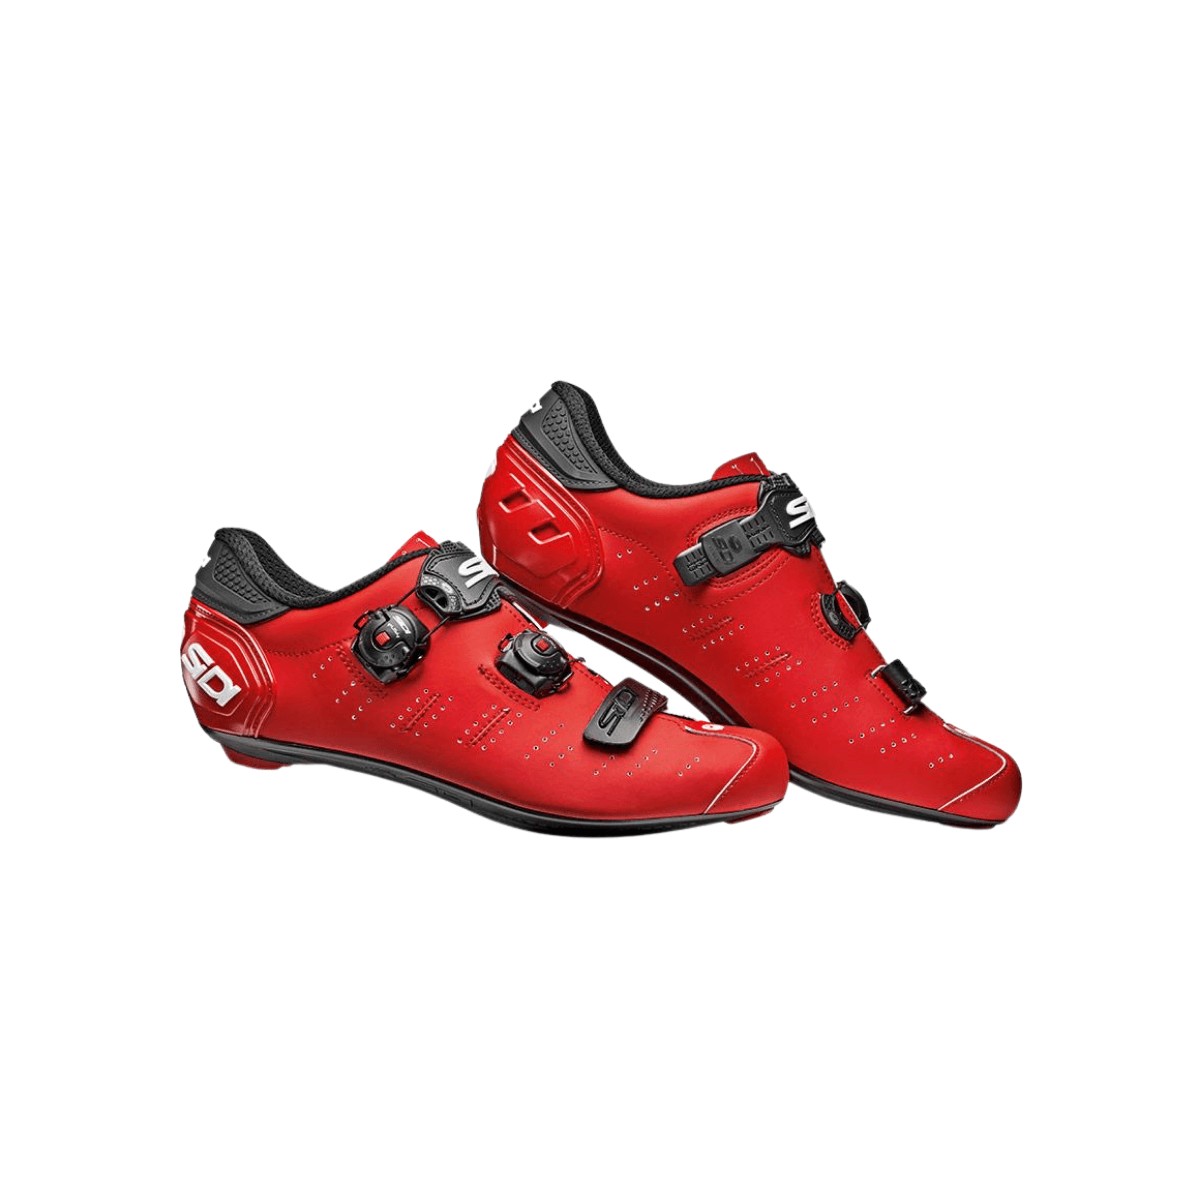 Sidi Ergo 5 Shoes Matte Red, Size 41 - EUR